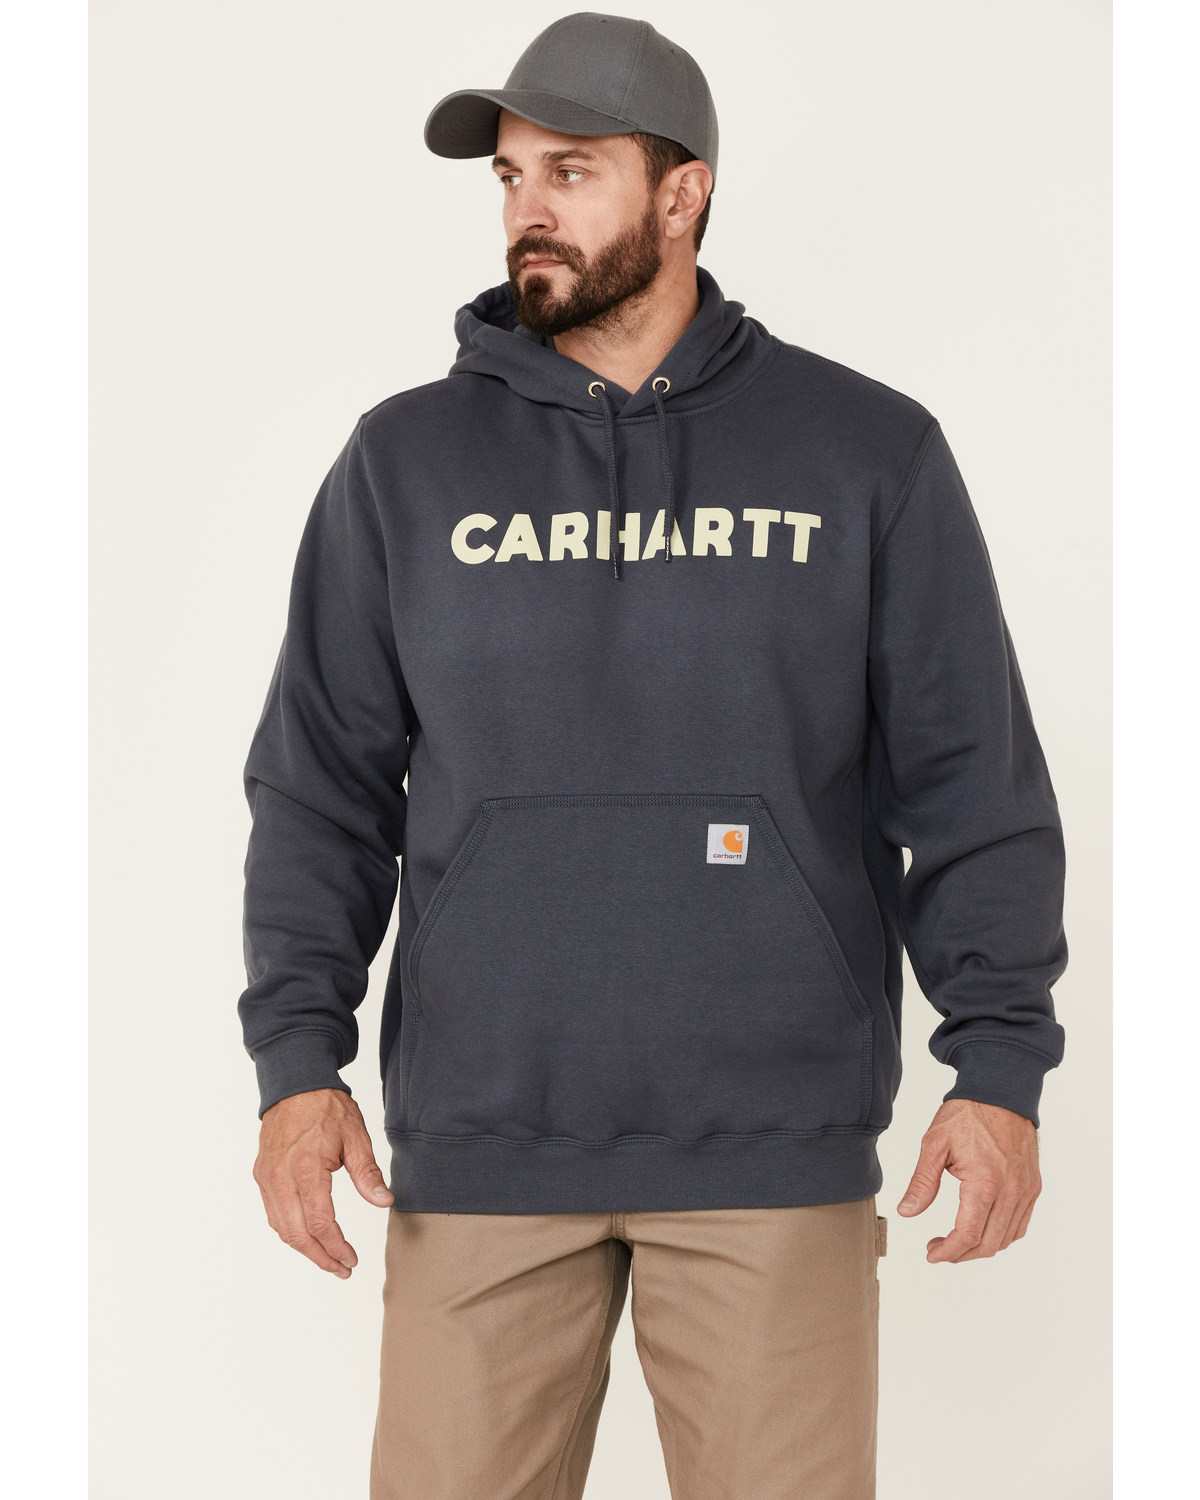 Carhartt Men's Loose Fit Midweight Logo Hooded Work Sweatshirt